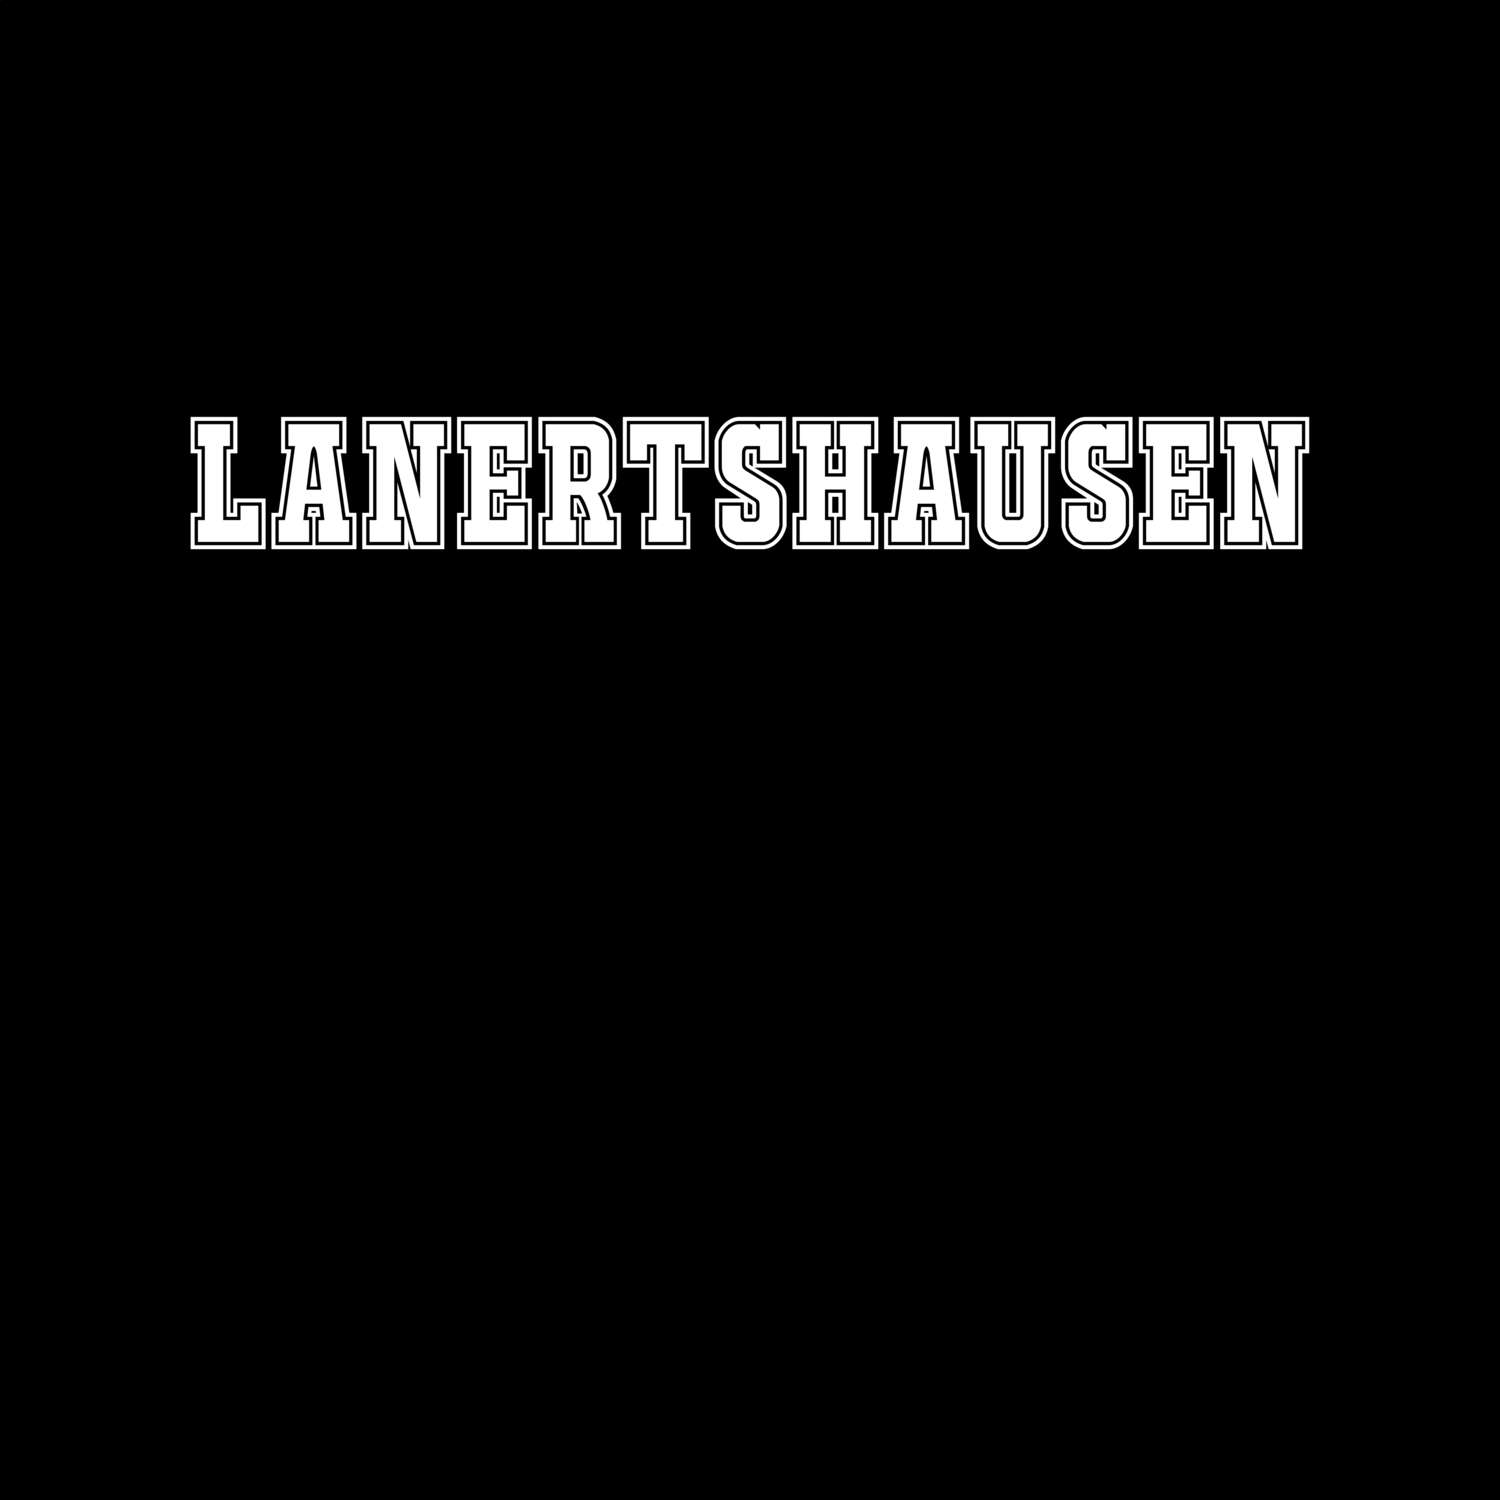 Lanertshausen T-Shirt »Classic«